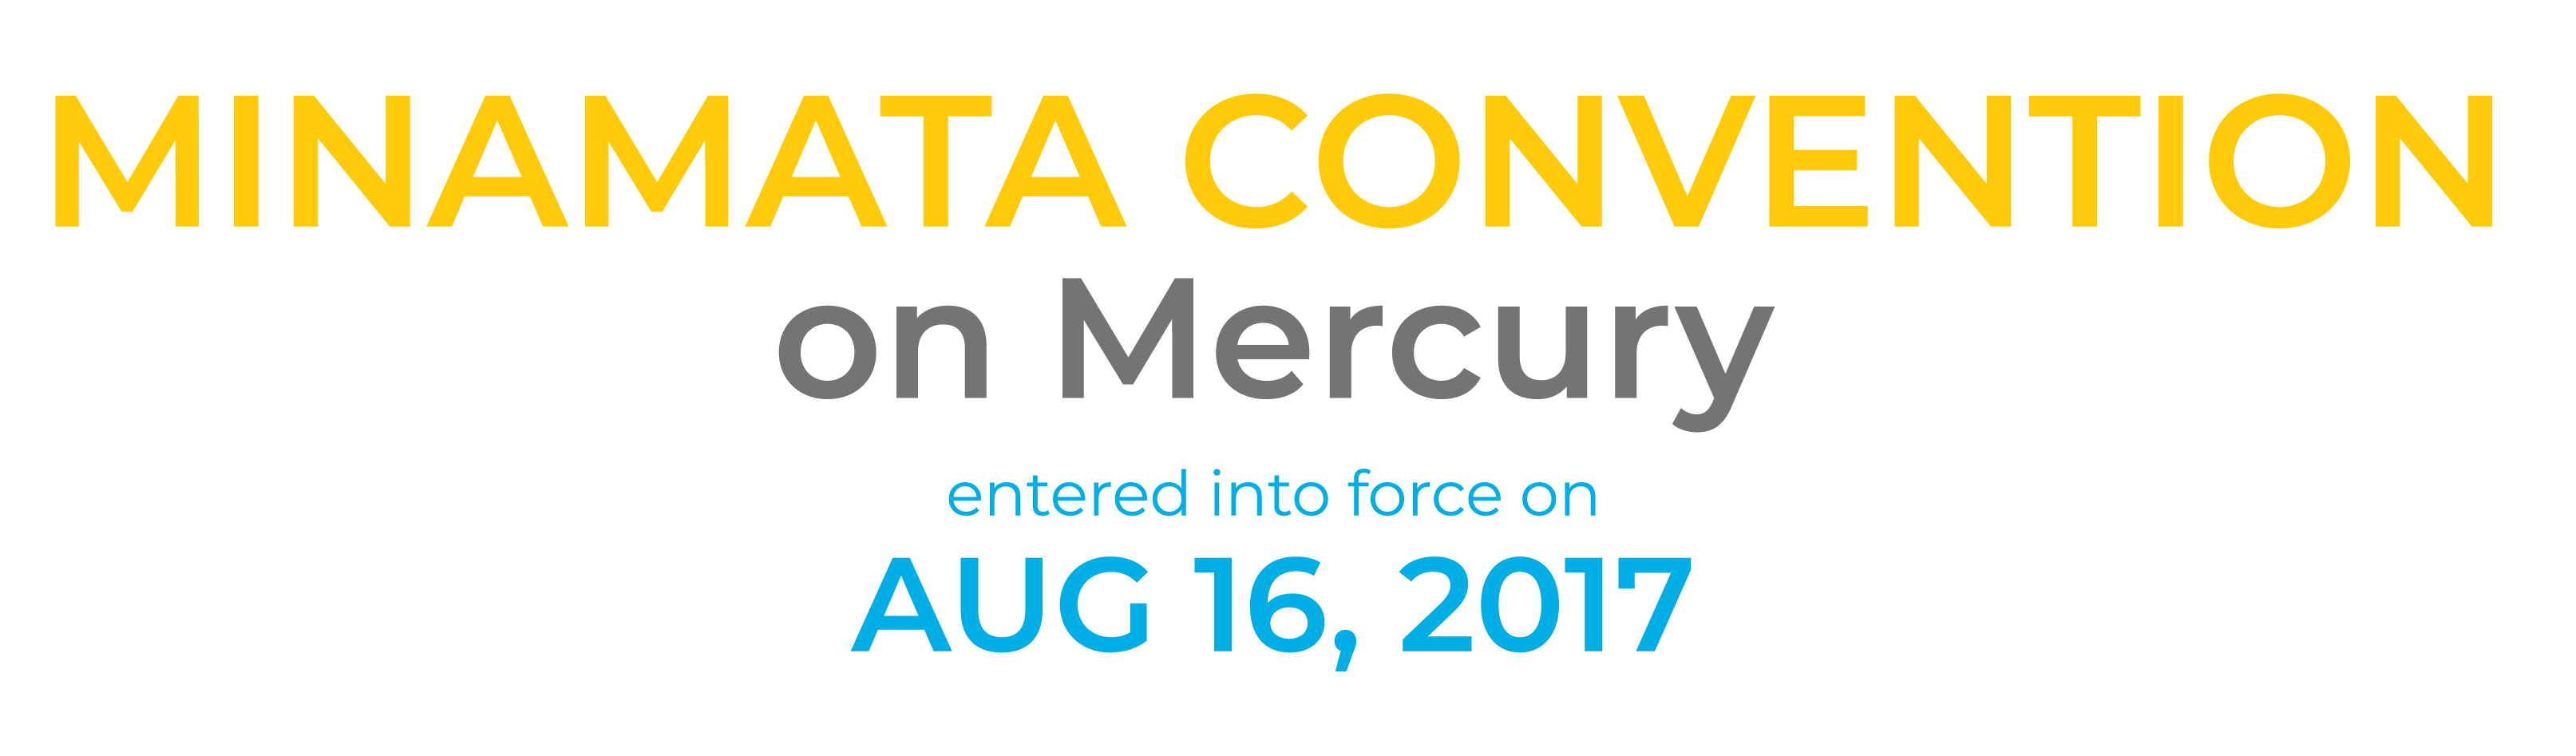 Minamata Convention on Mercury